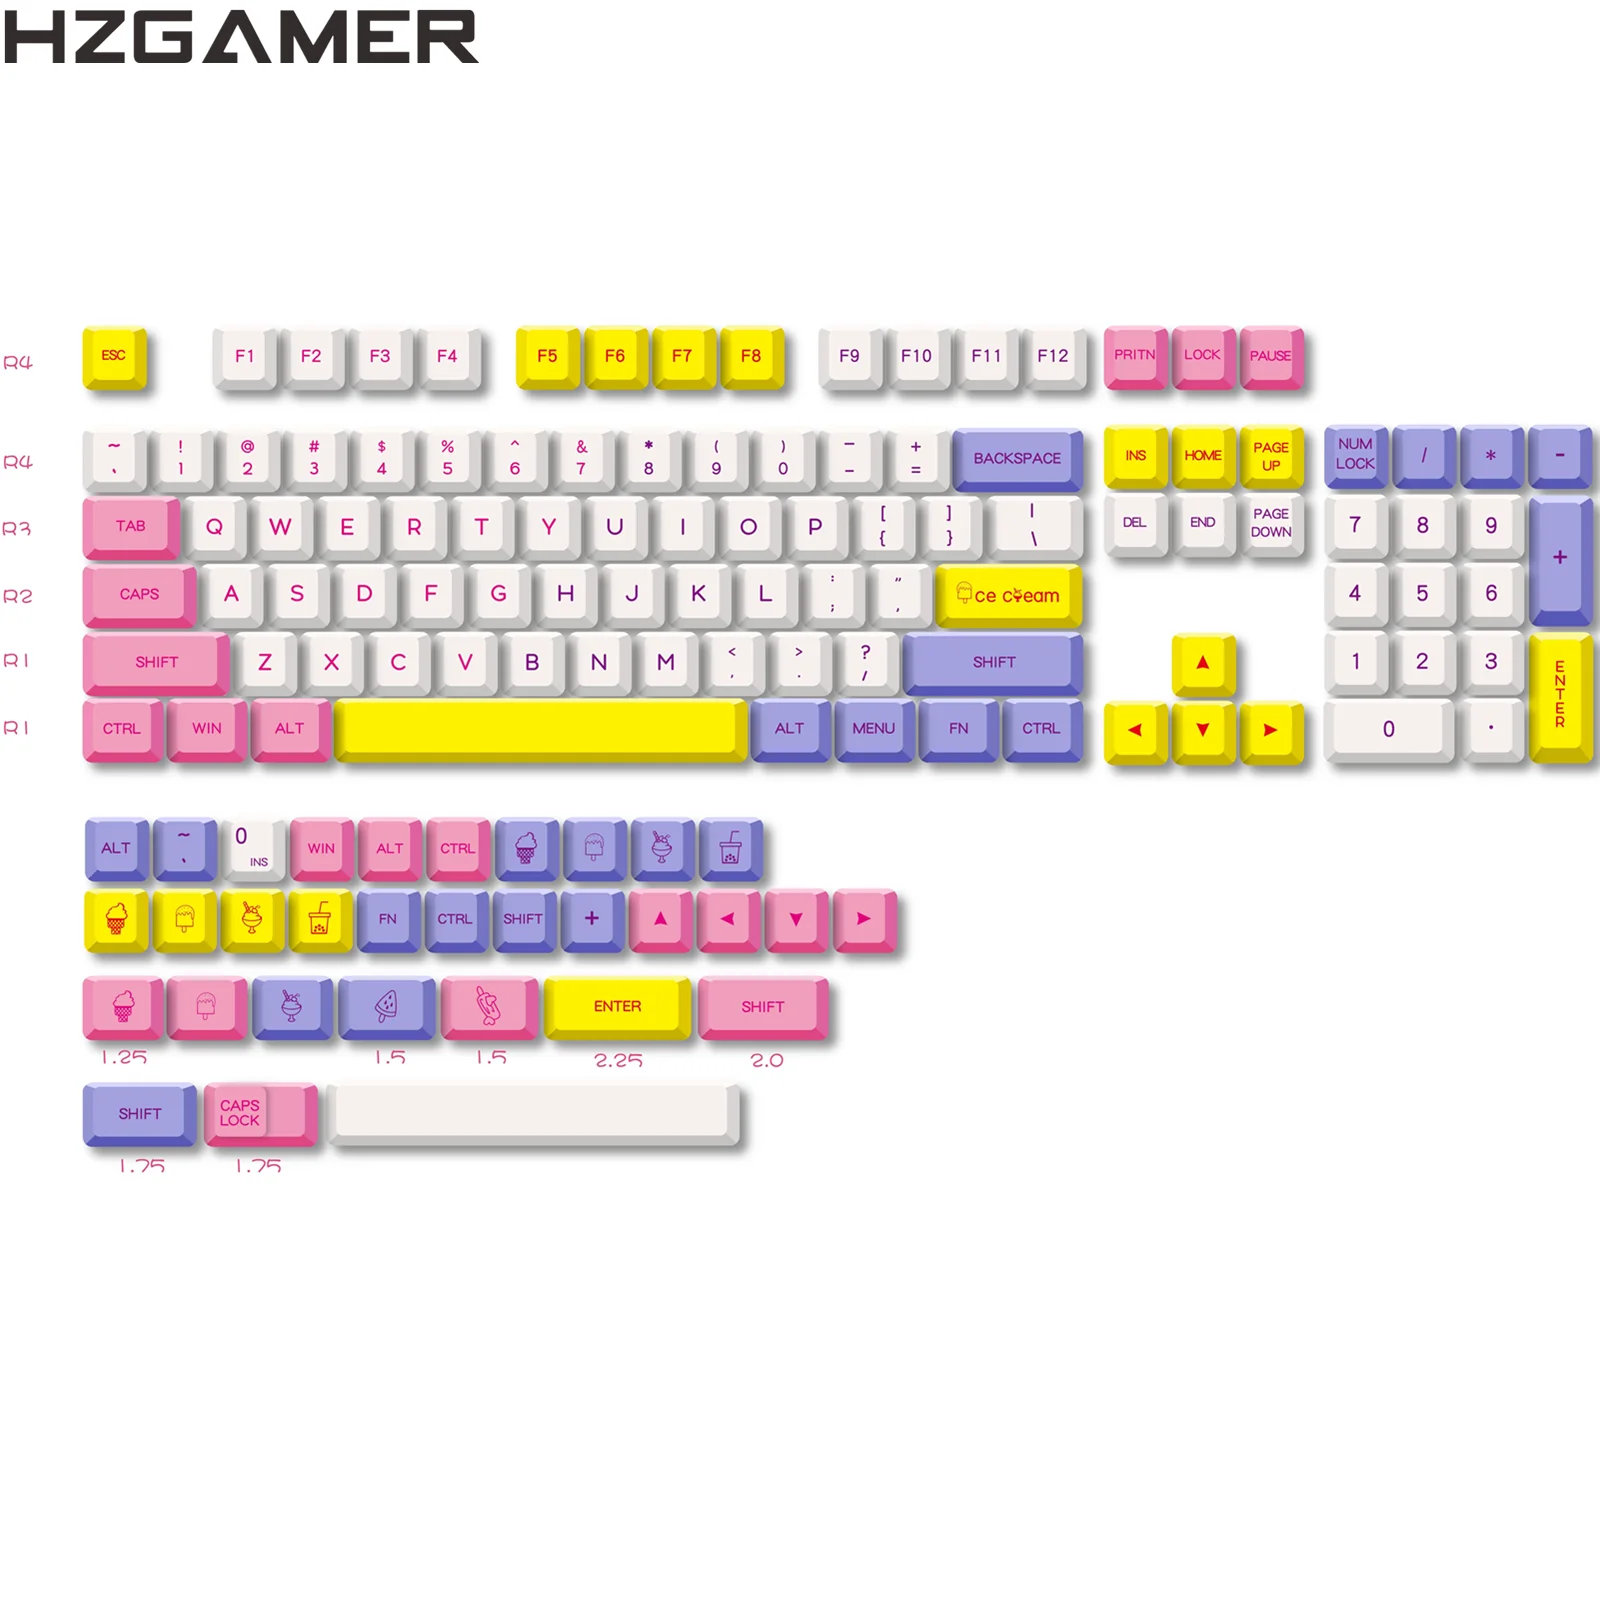 

HZGAMER XDA Profile Gaming Mechanical Keyboard Custom Dye Sublimation Keycap 136Keys Ice Cream Keycaps